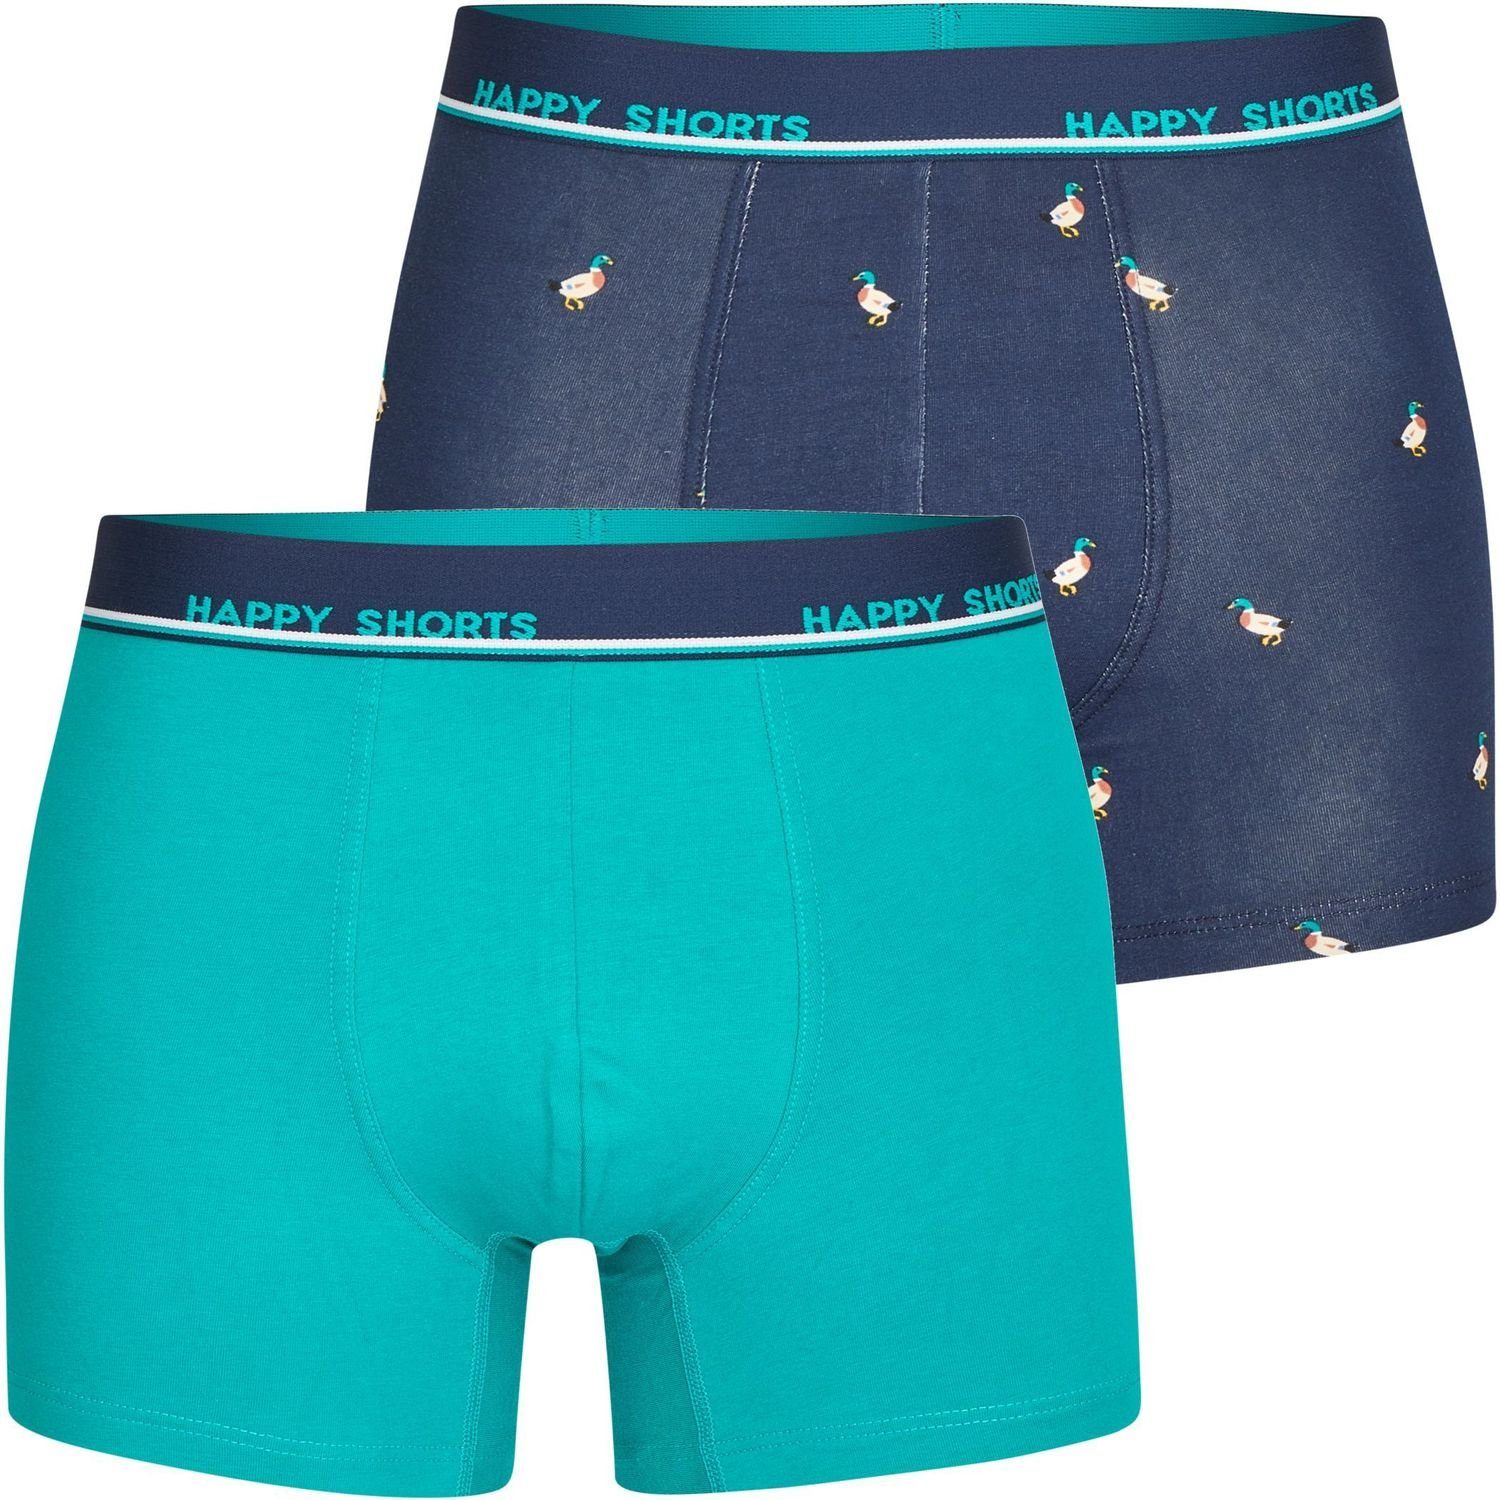 HAPPY SHORTS Trunk 2 Happy Shorts Pants Jersey Trunk Herren Boxershorts Ente - Duck (1-St)